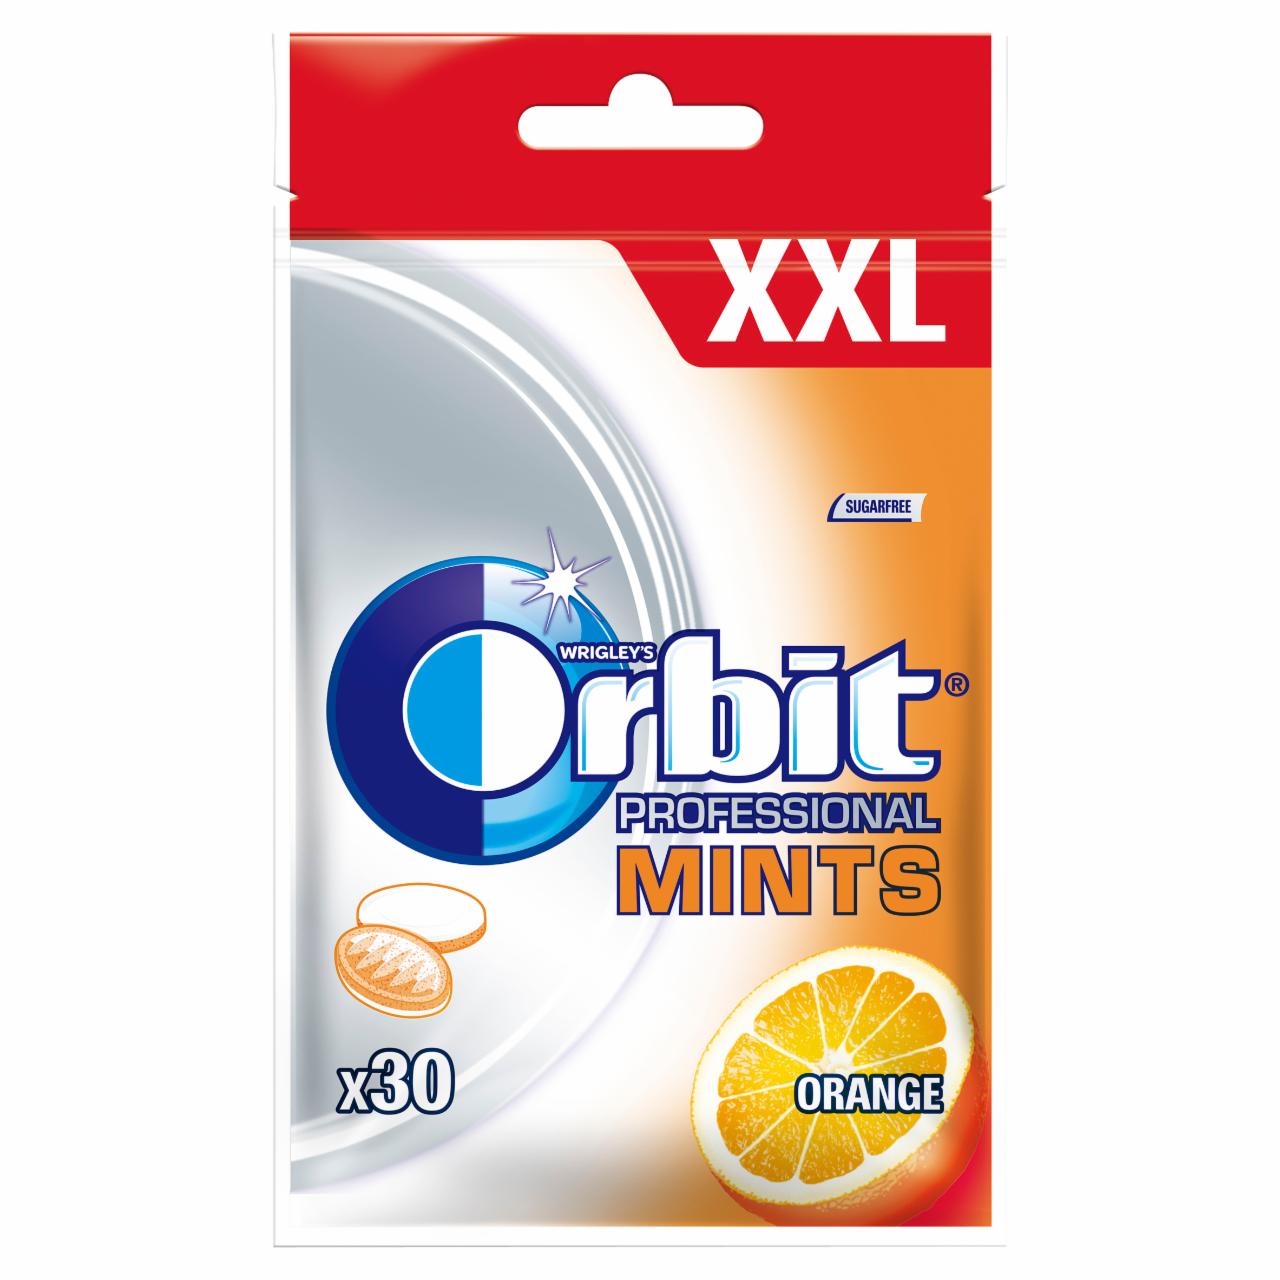 Photo - Orbit Professional Mints Orange XXL Sugarfree Candies 30 g (30 Pieces)